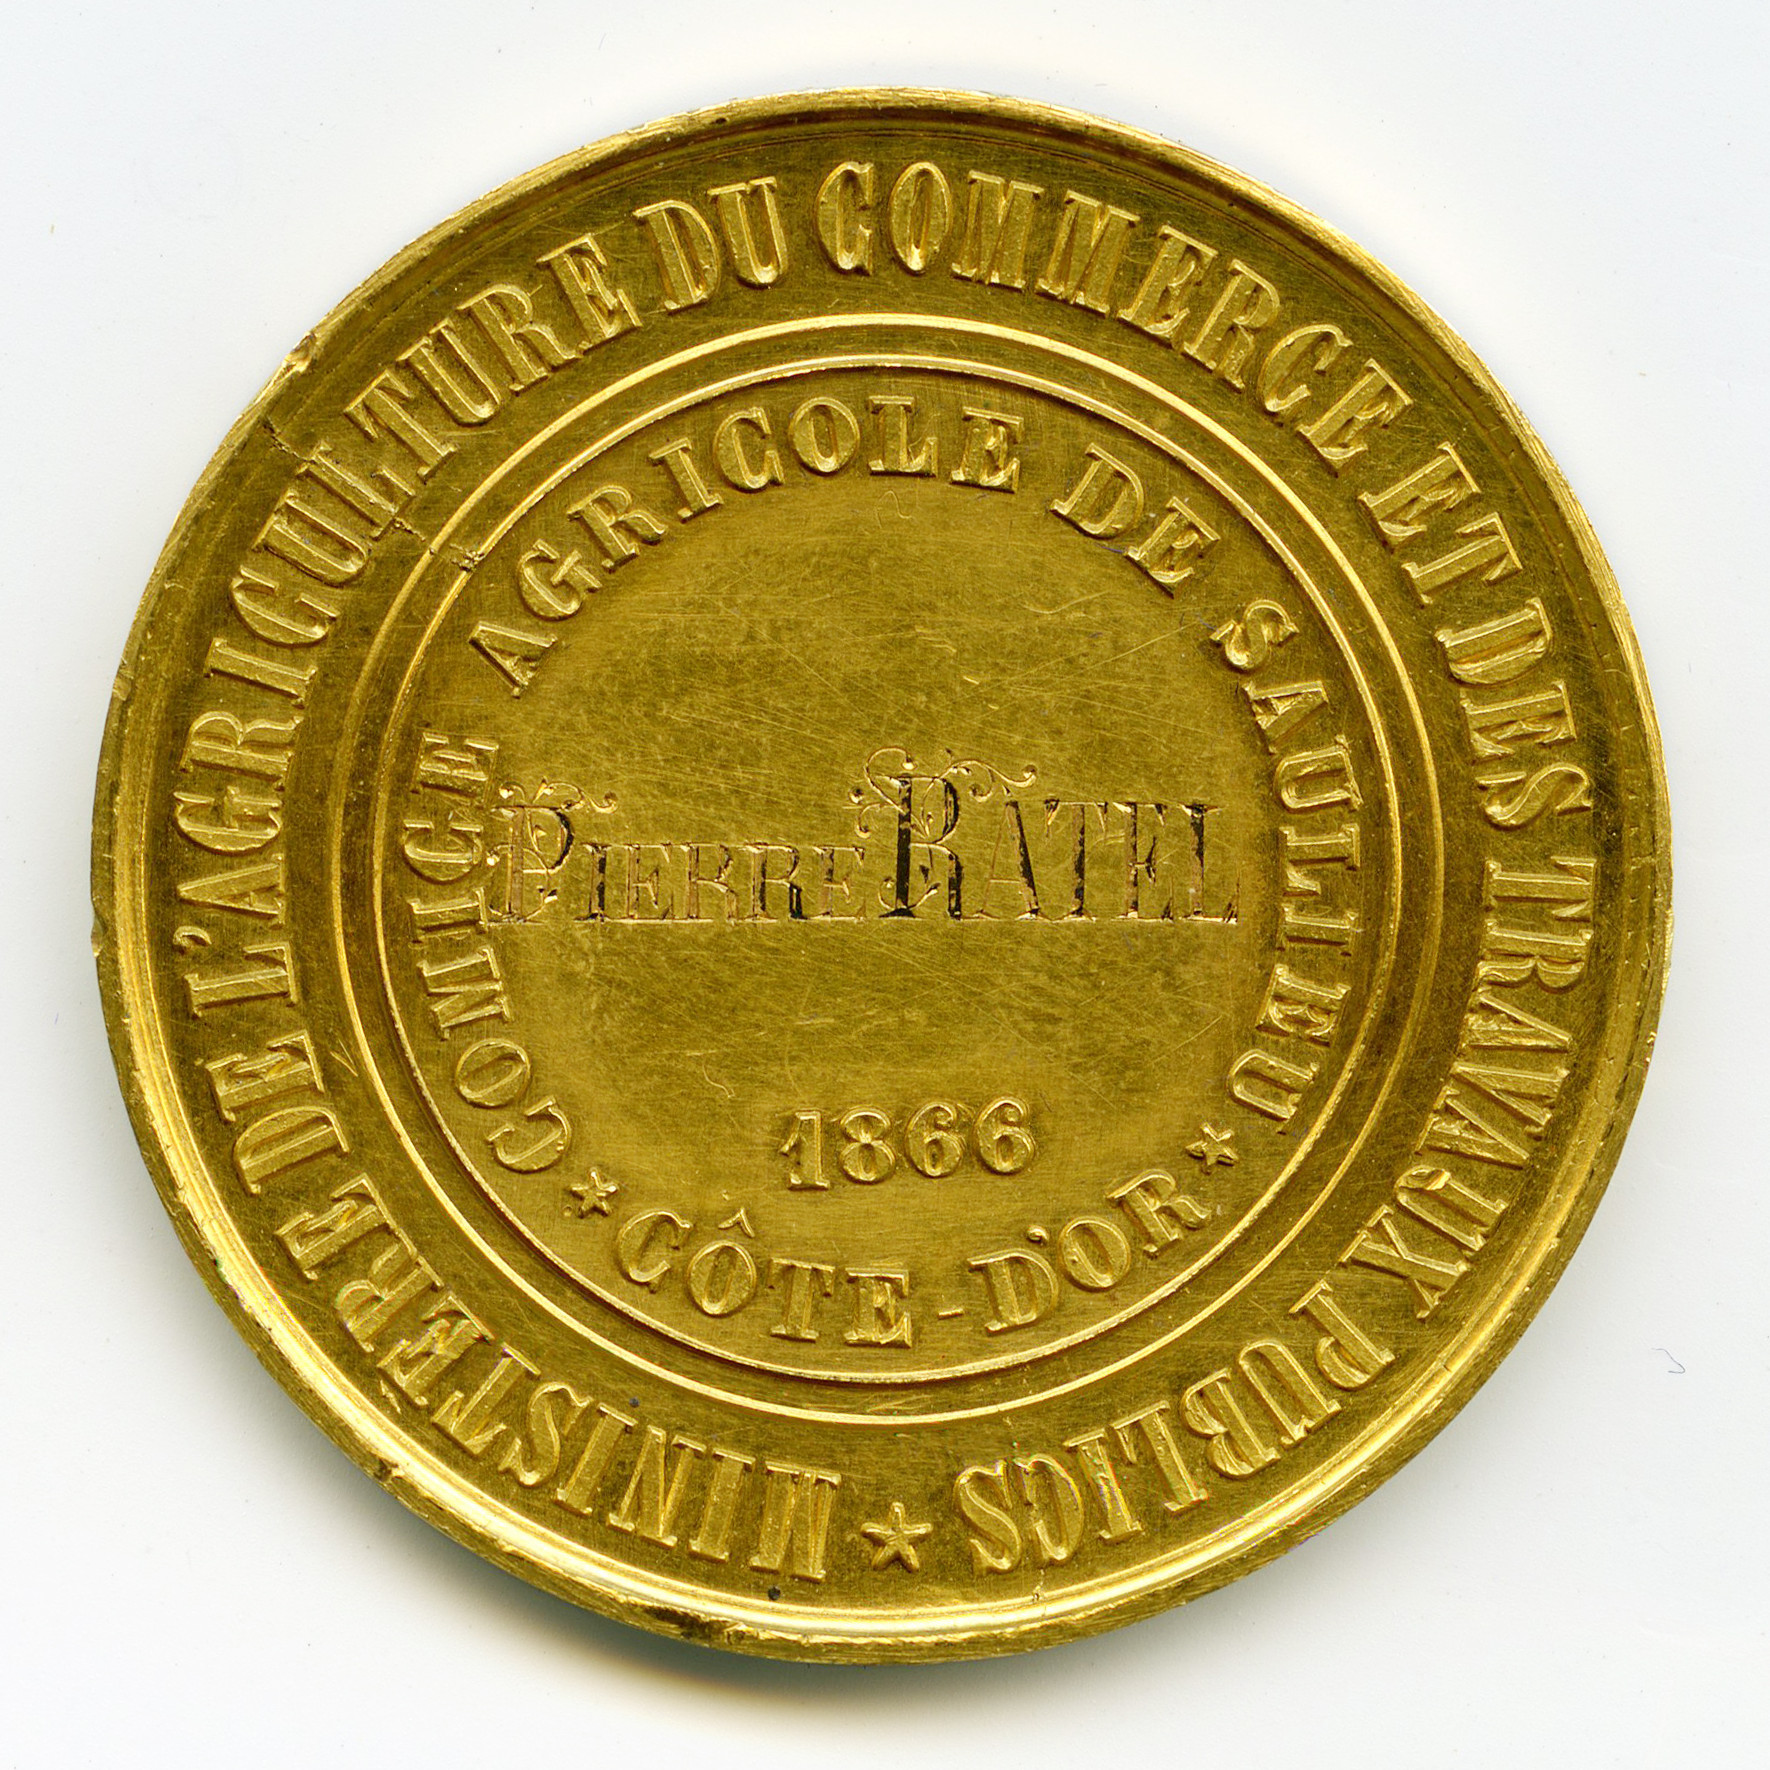 Napoléon III - Médaille Agricole - 1866 revers